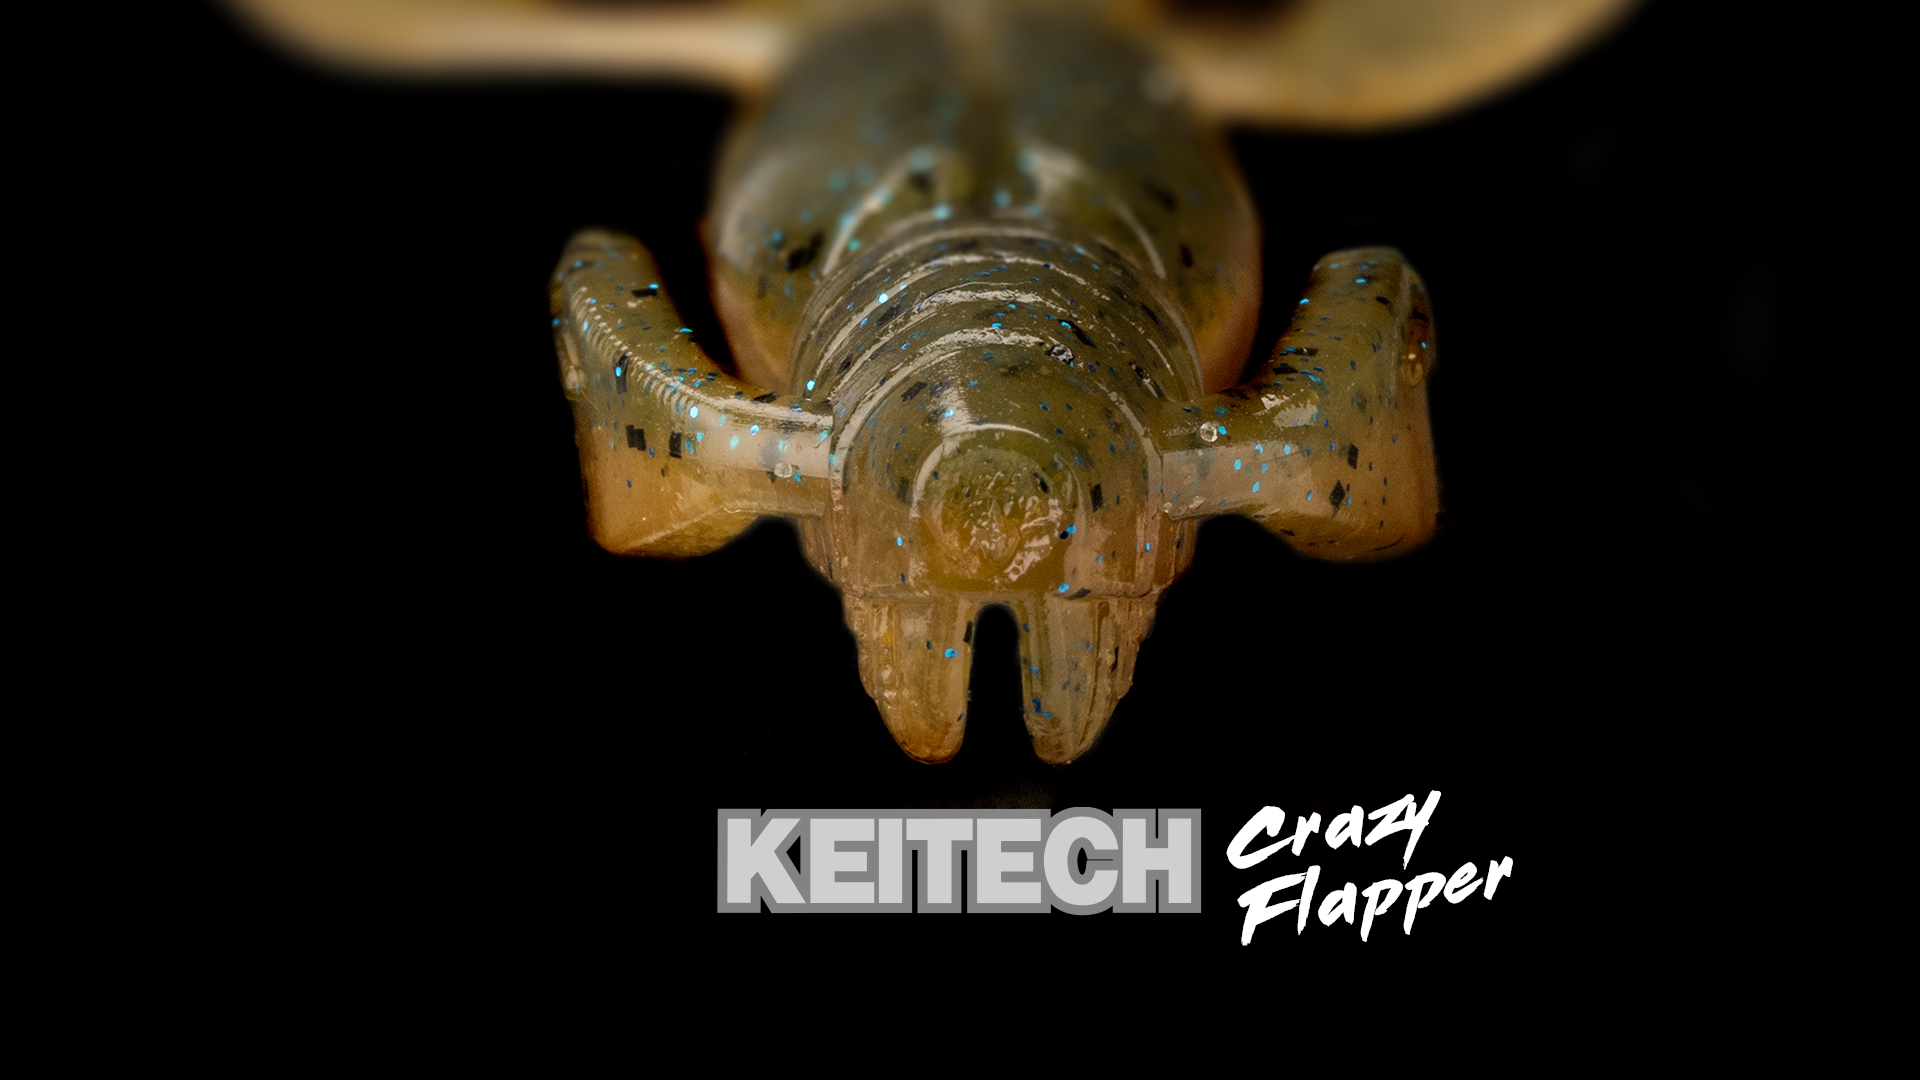 Keitech Crazy Flapper 3,6 inch (9,1cm)